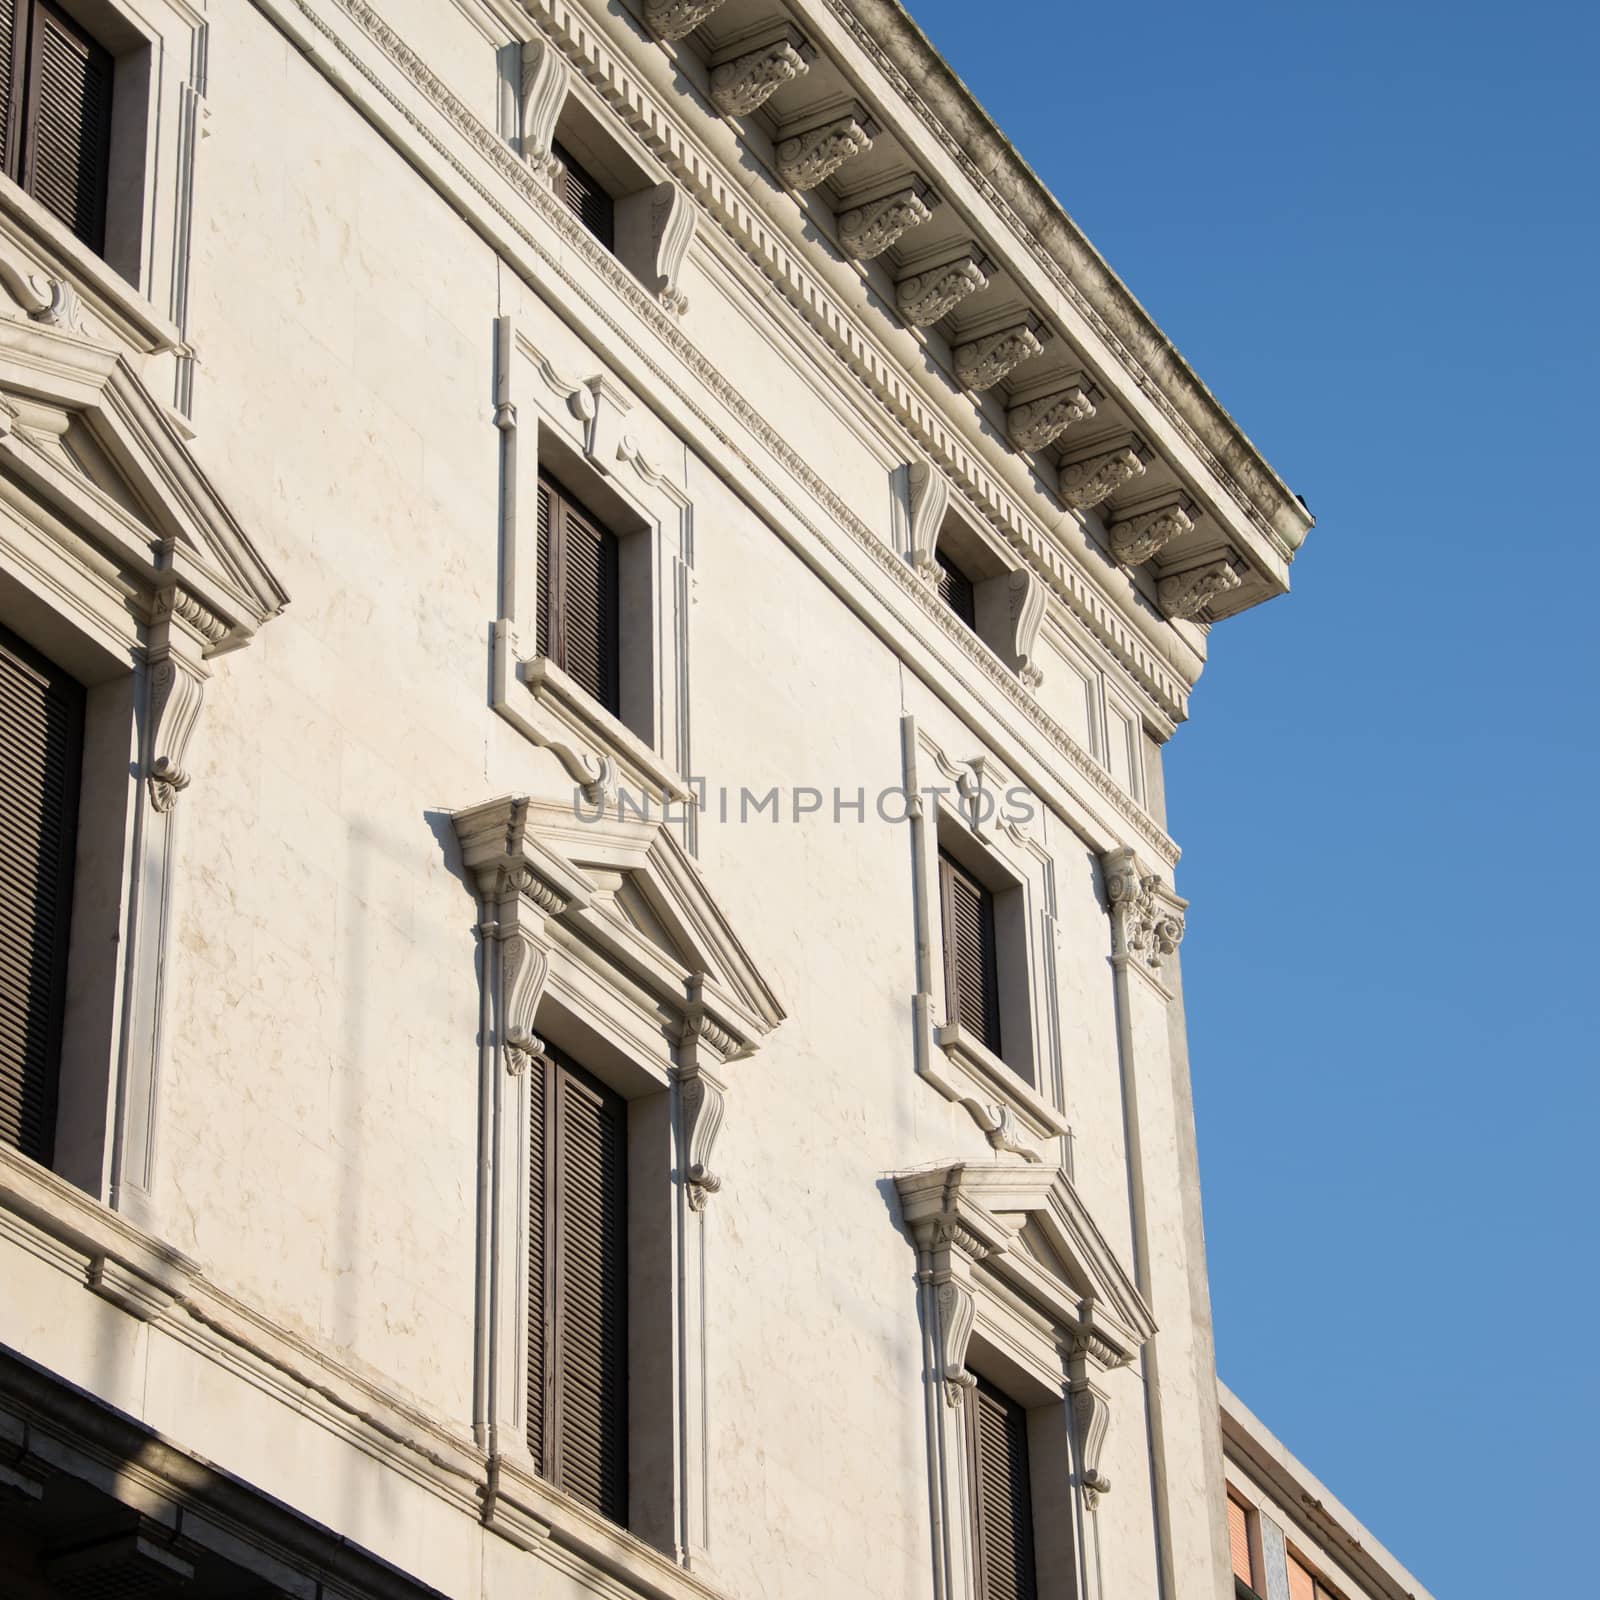 Architecture of renaissance in Ferrara